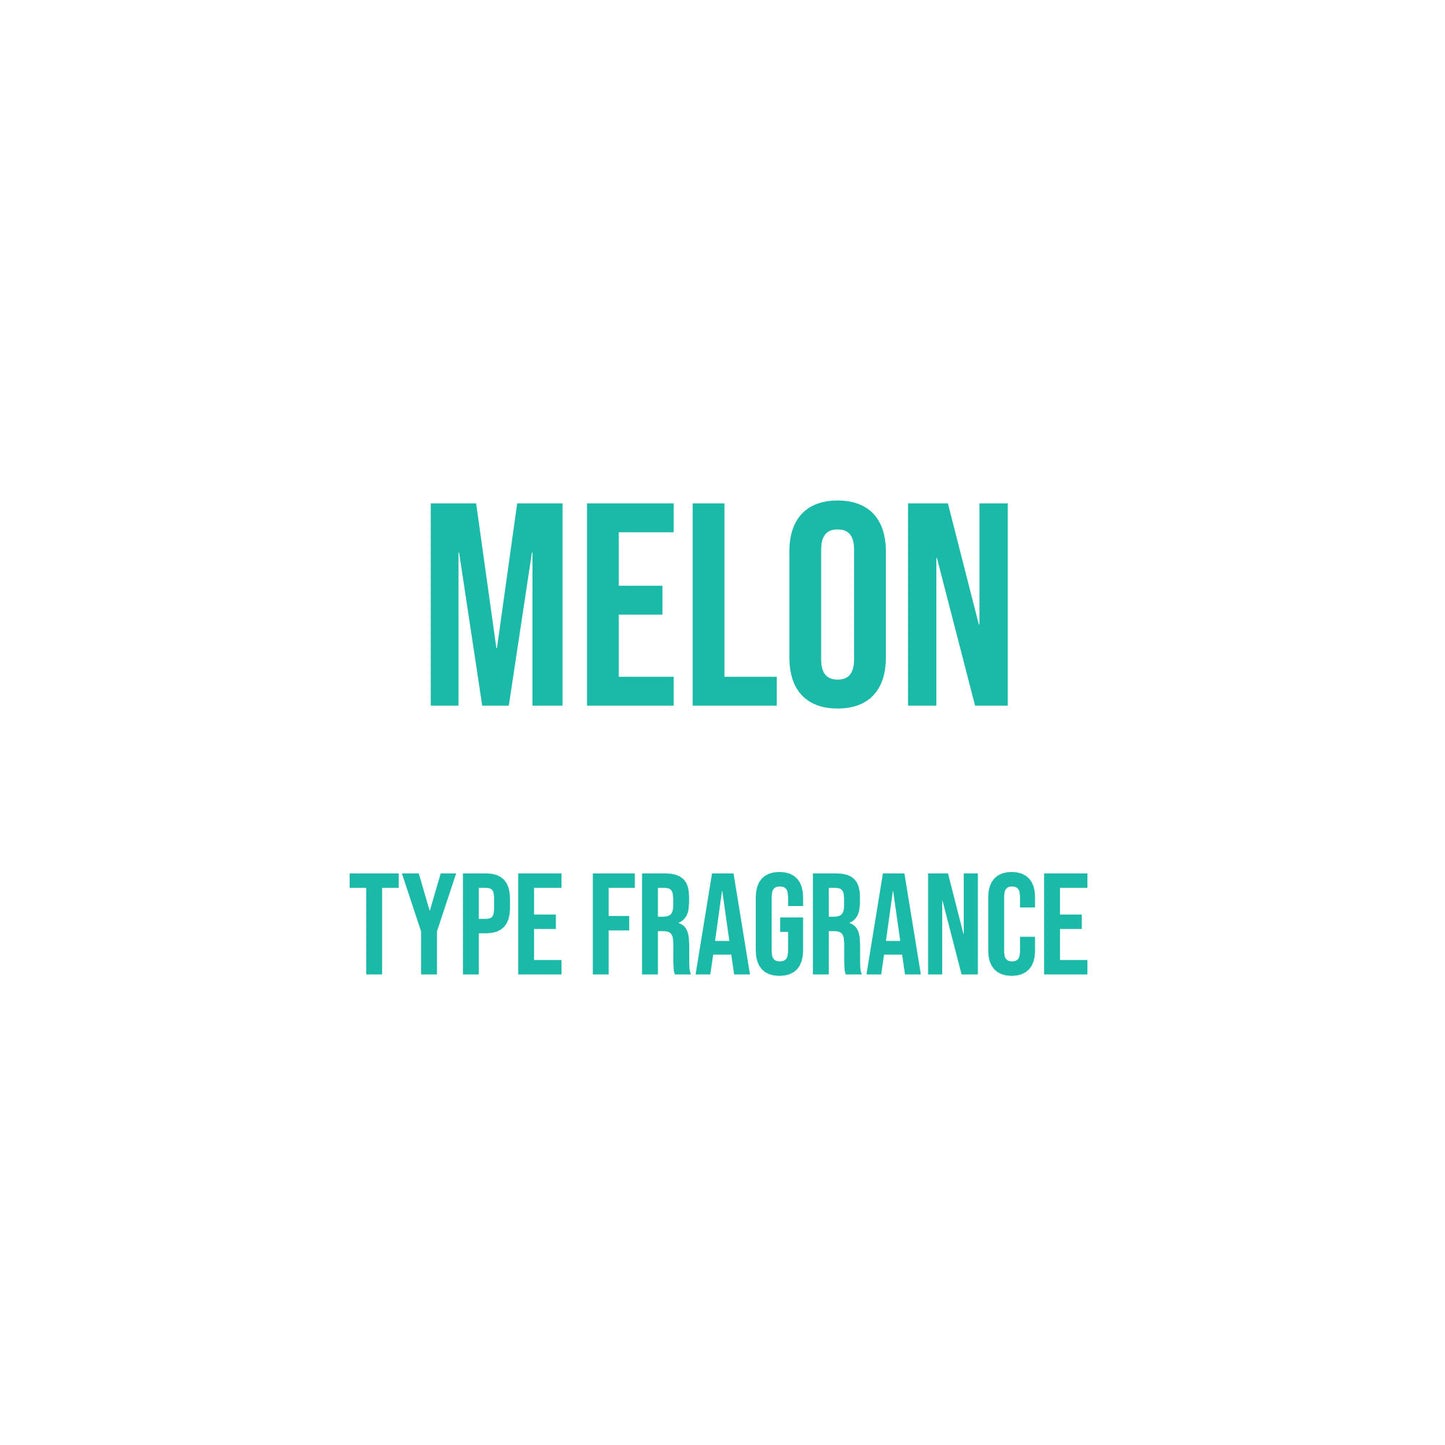 Melon Type Fragrance